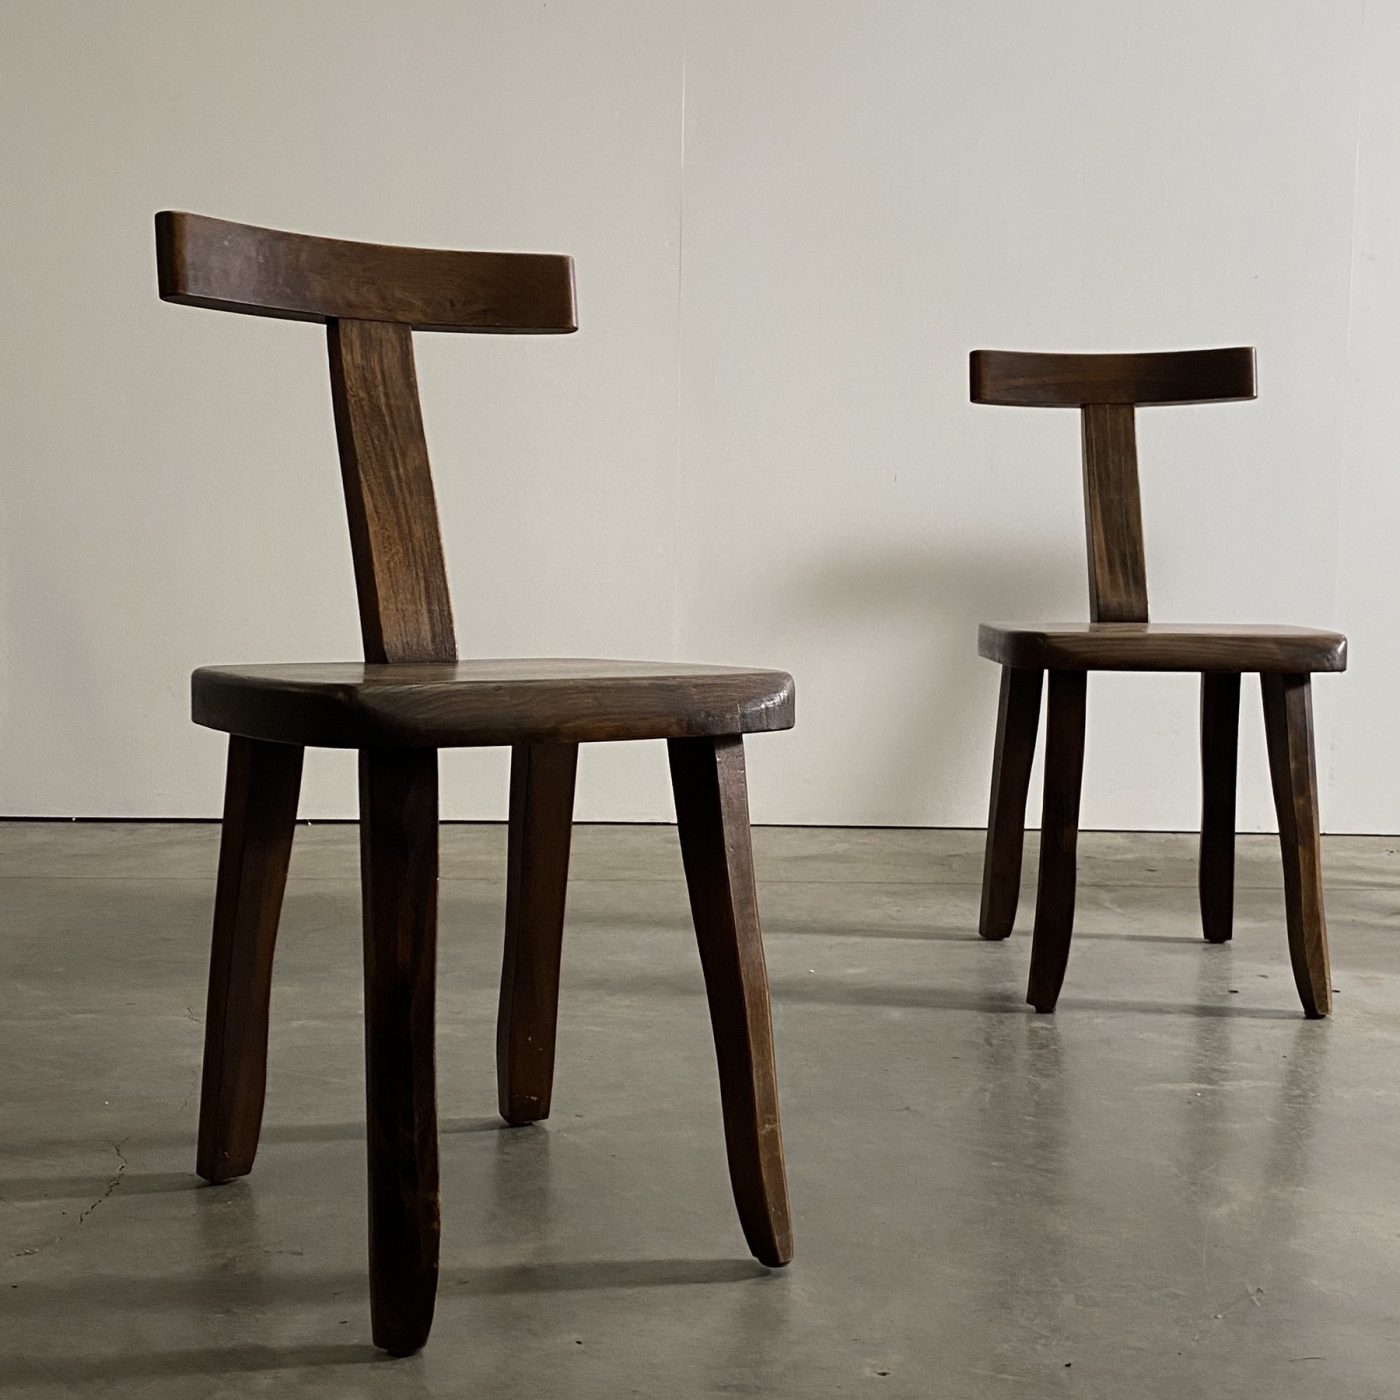 objet-vagabond-hanninen-chairs0001